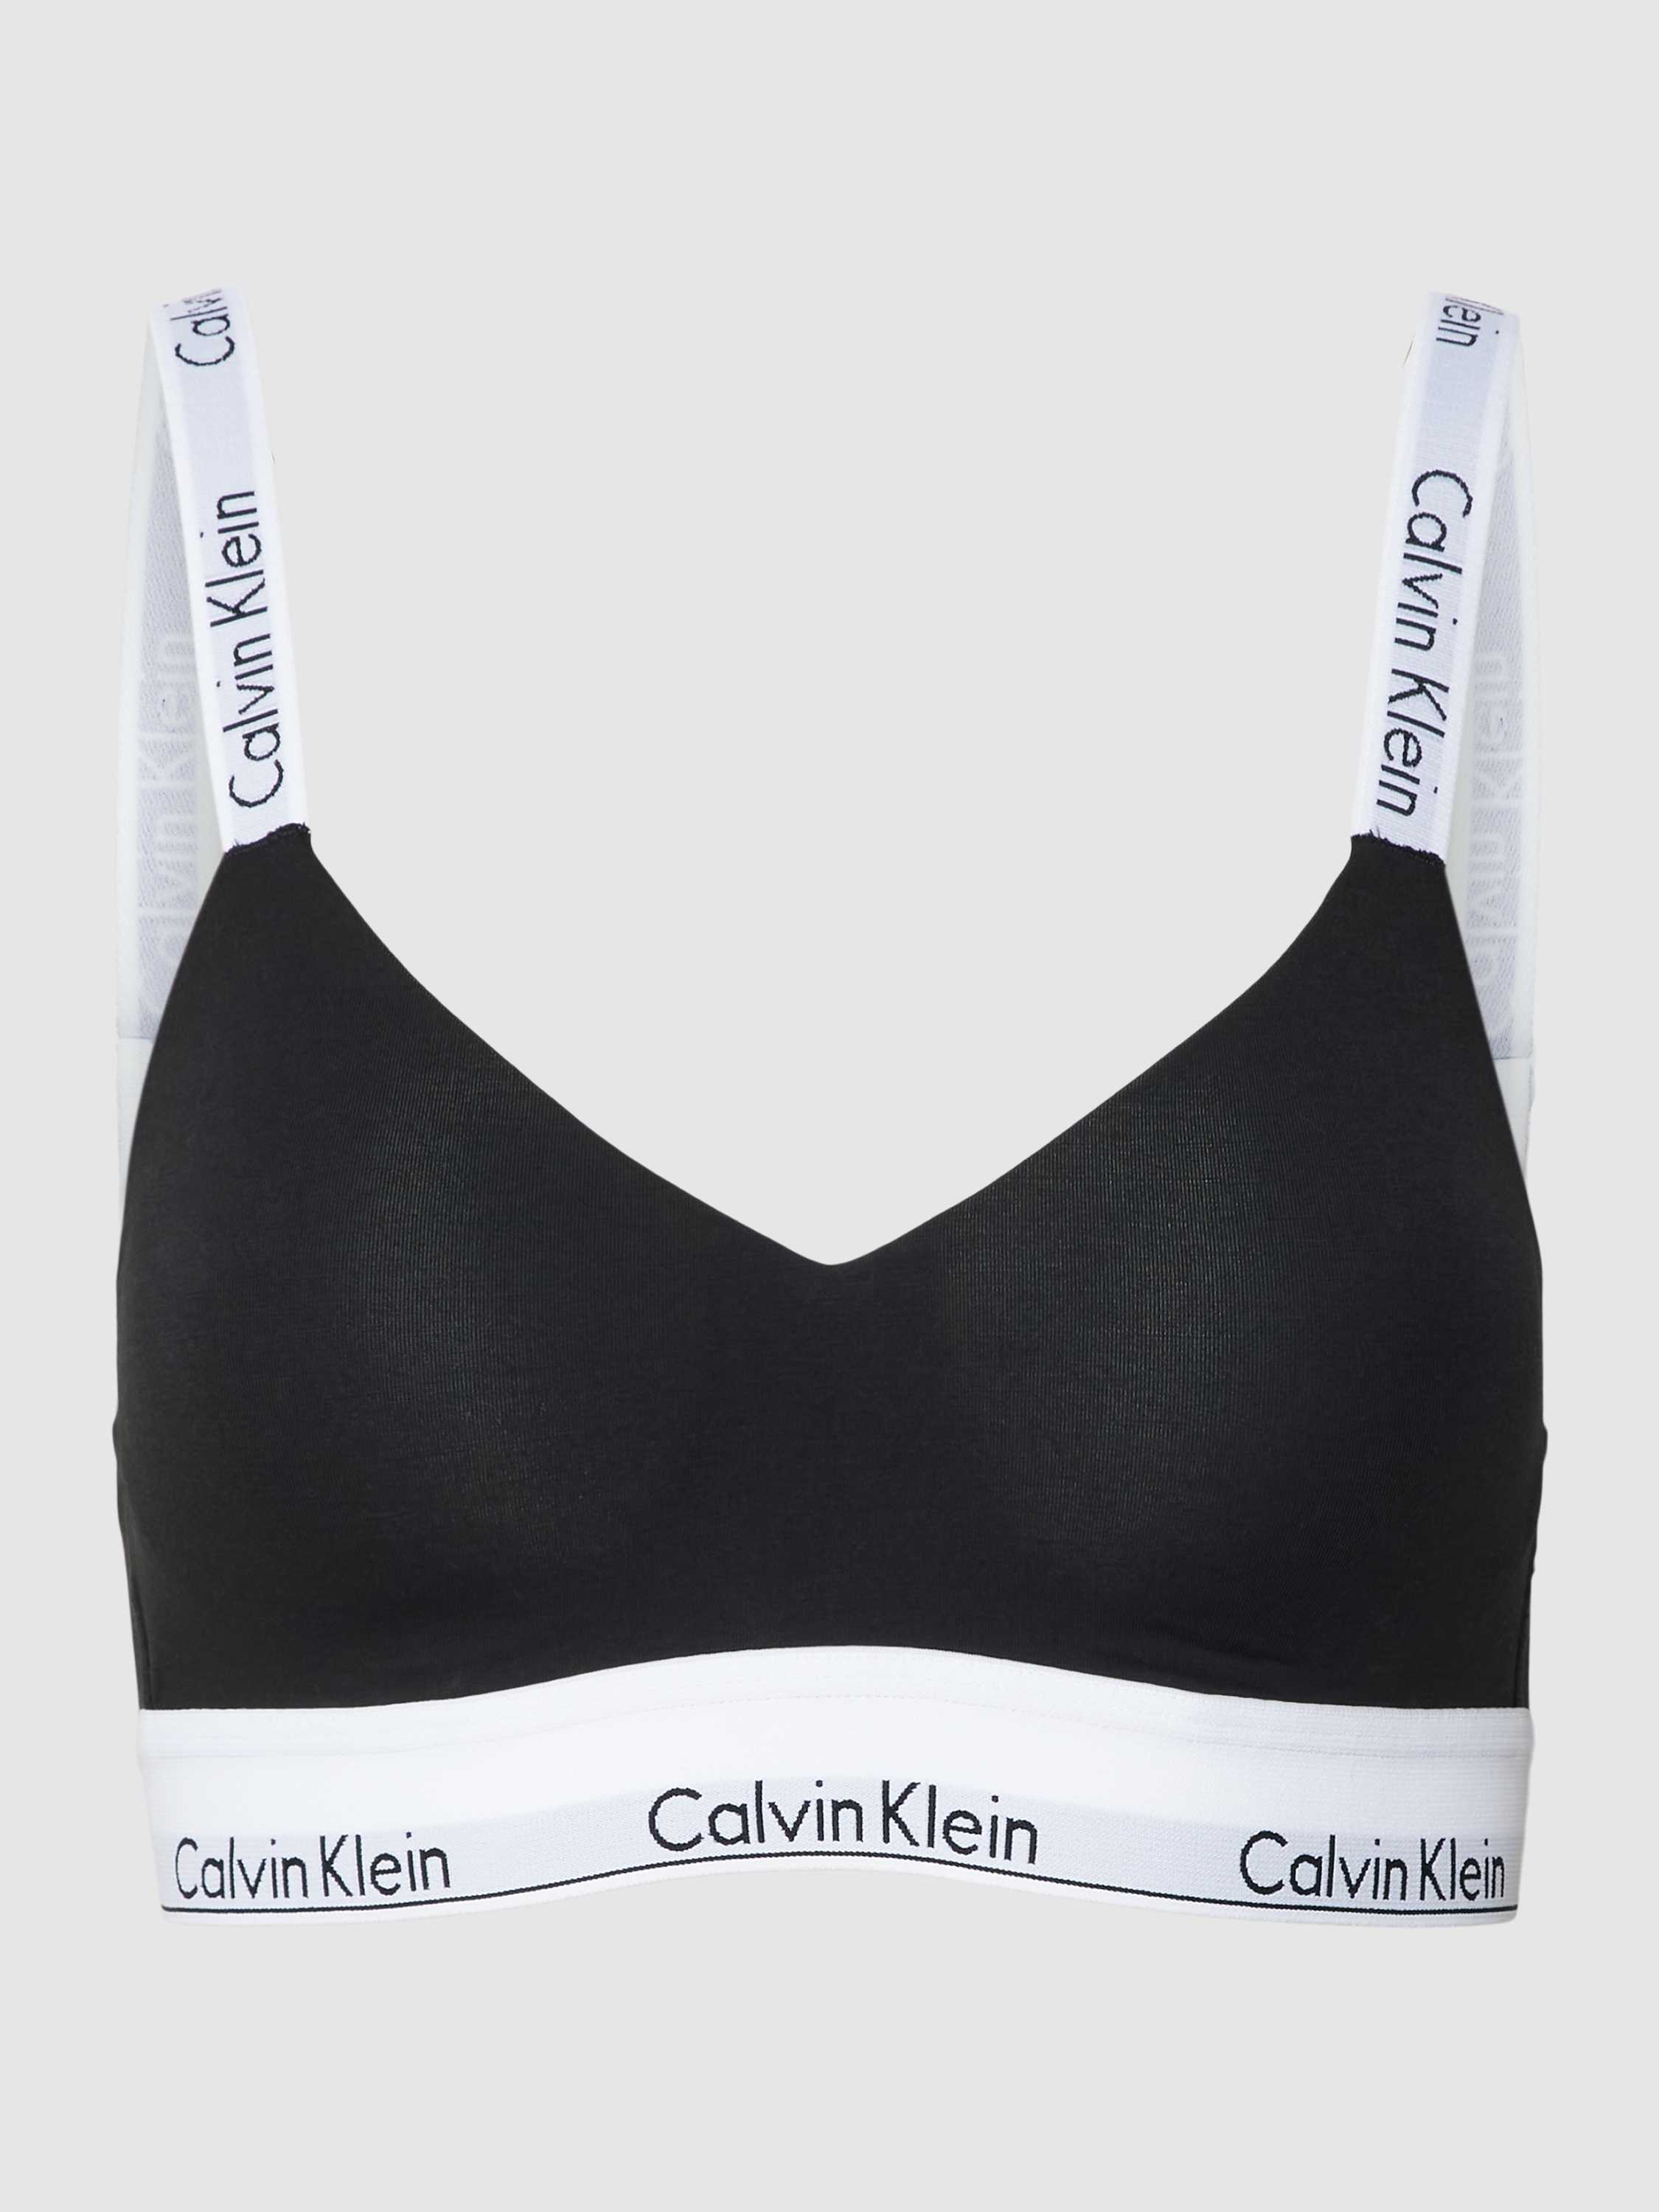 Calvin Klein biały dopasowany biustonosz sportowy push up S - OVERLOOK :  OVERLOOK